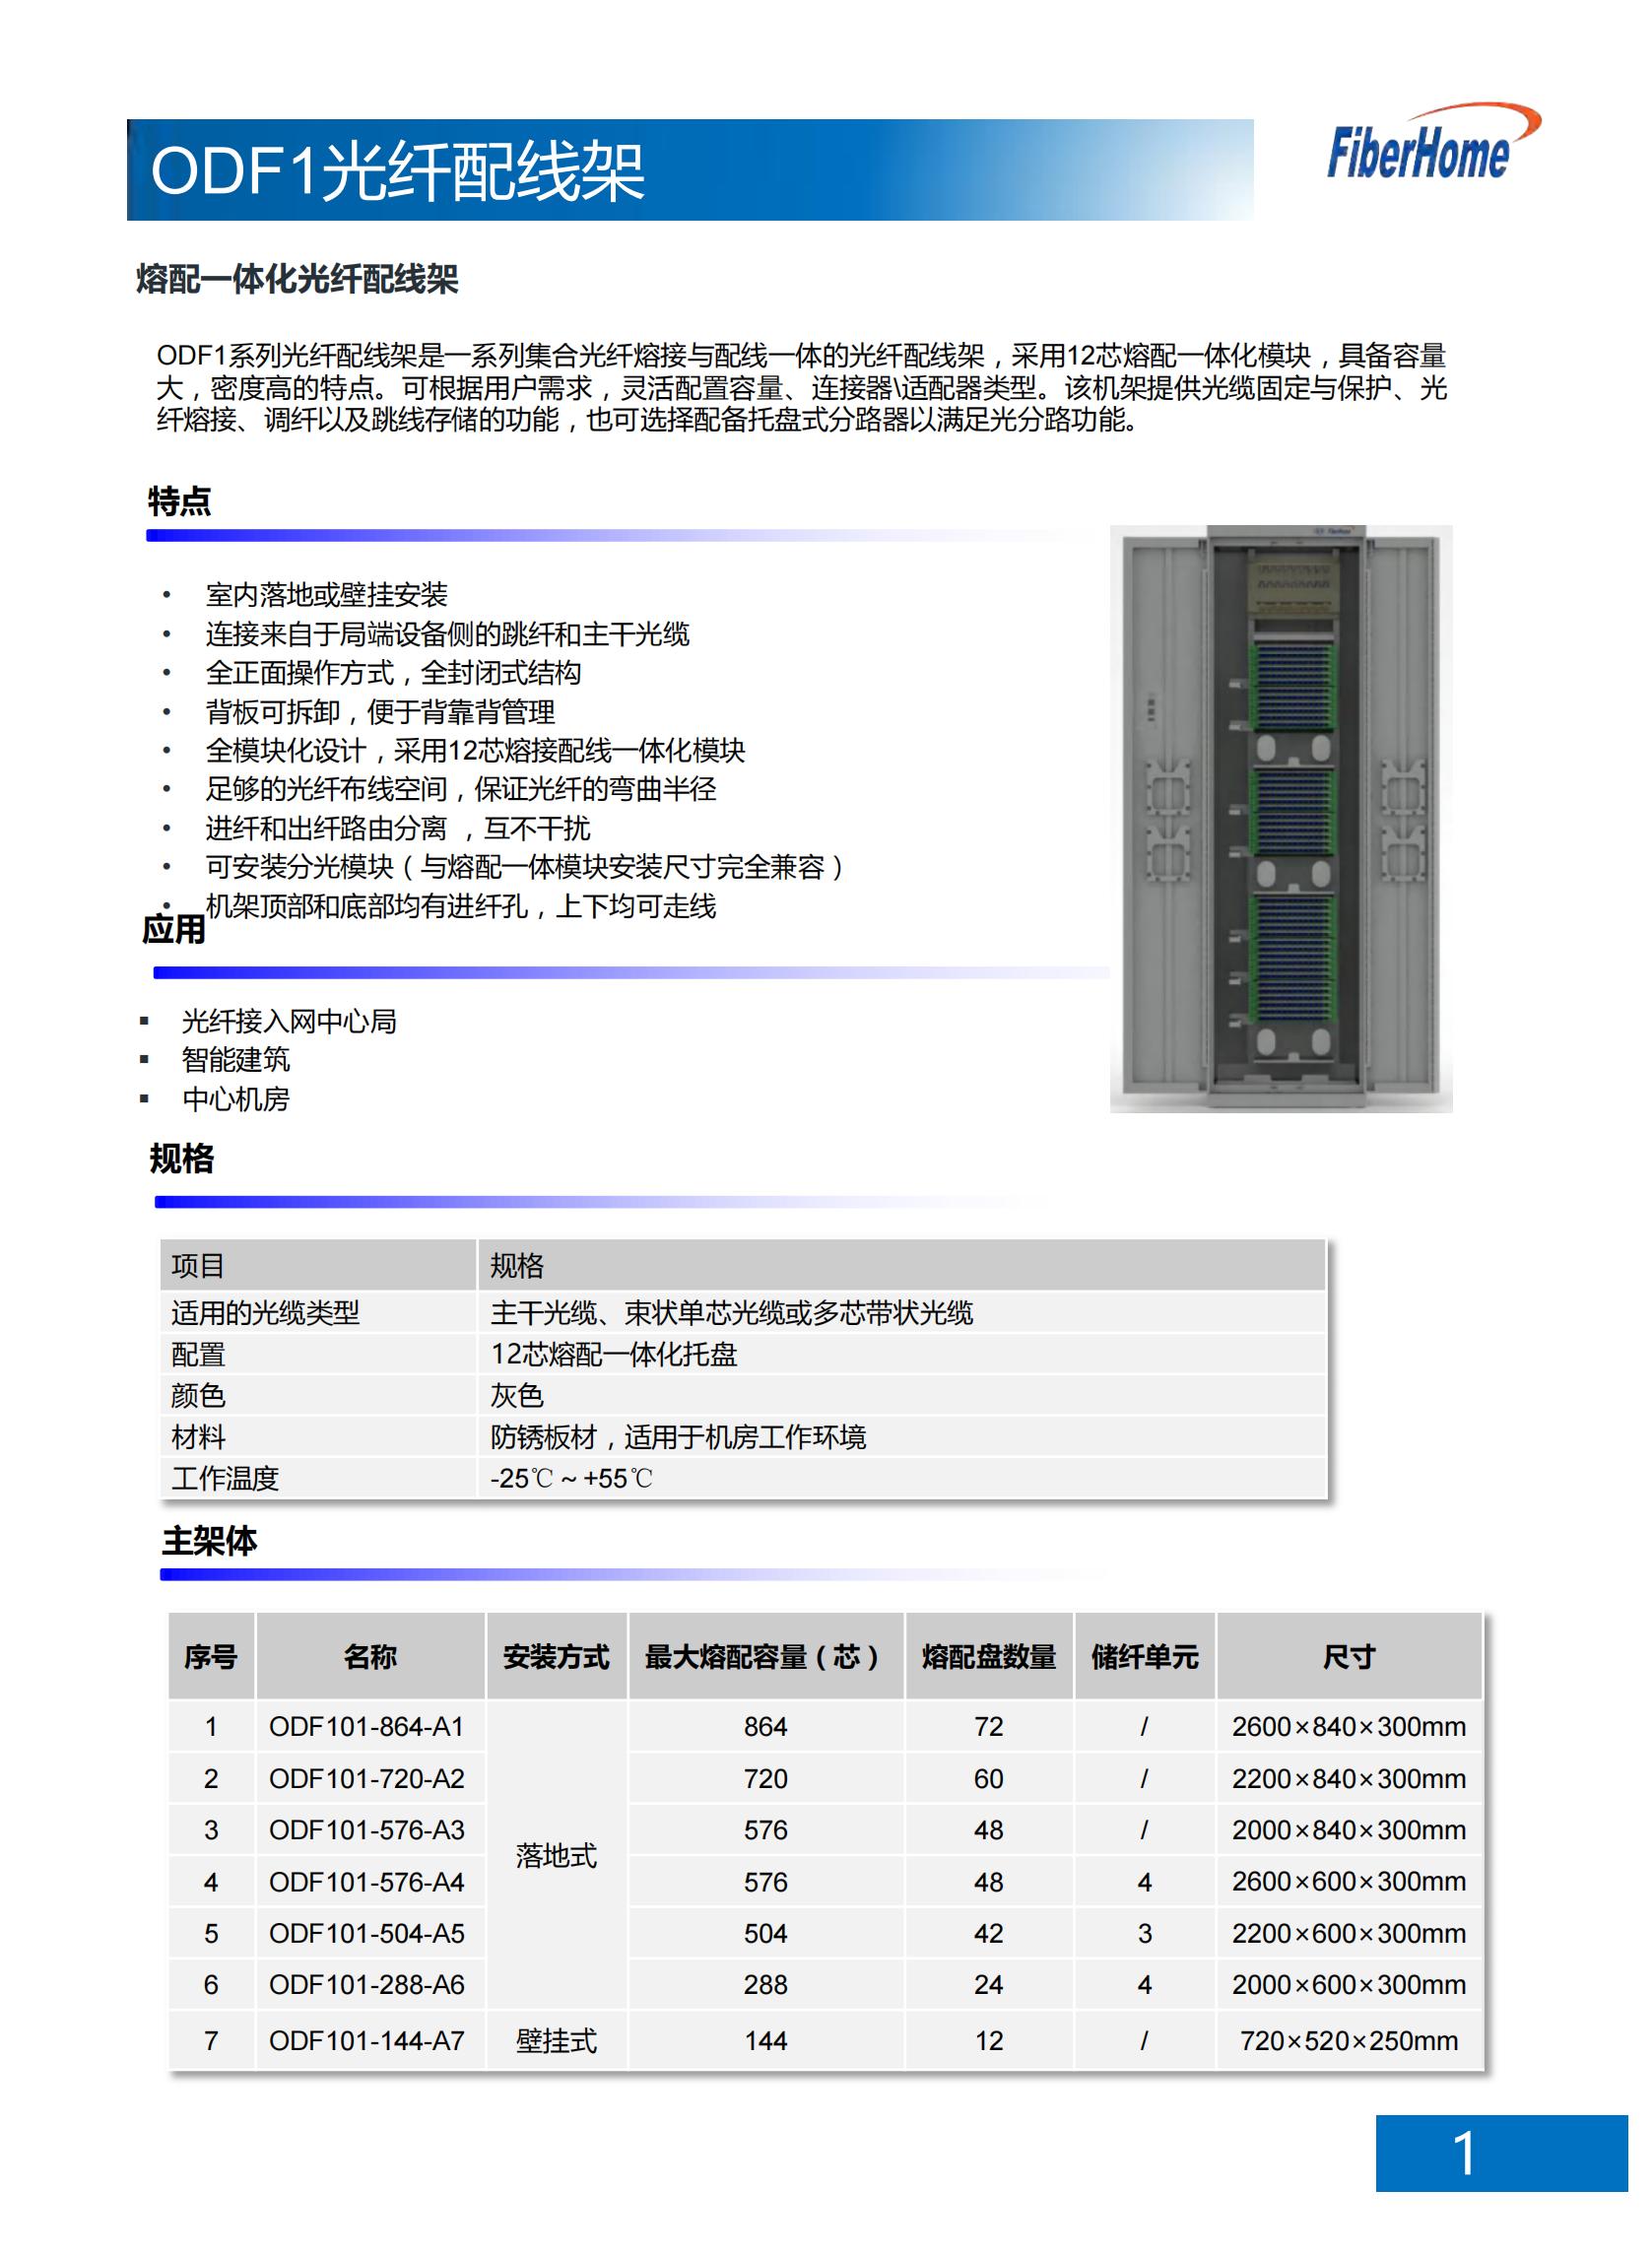 ODF101-1728-A1-LC ODF光纤配线架 （864芯落地式 无子框型 全部含24芯LC熔配一体化单元）